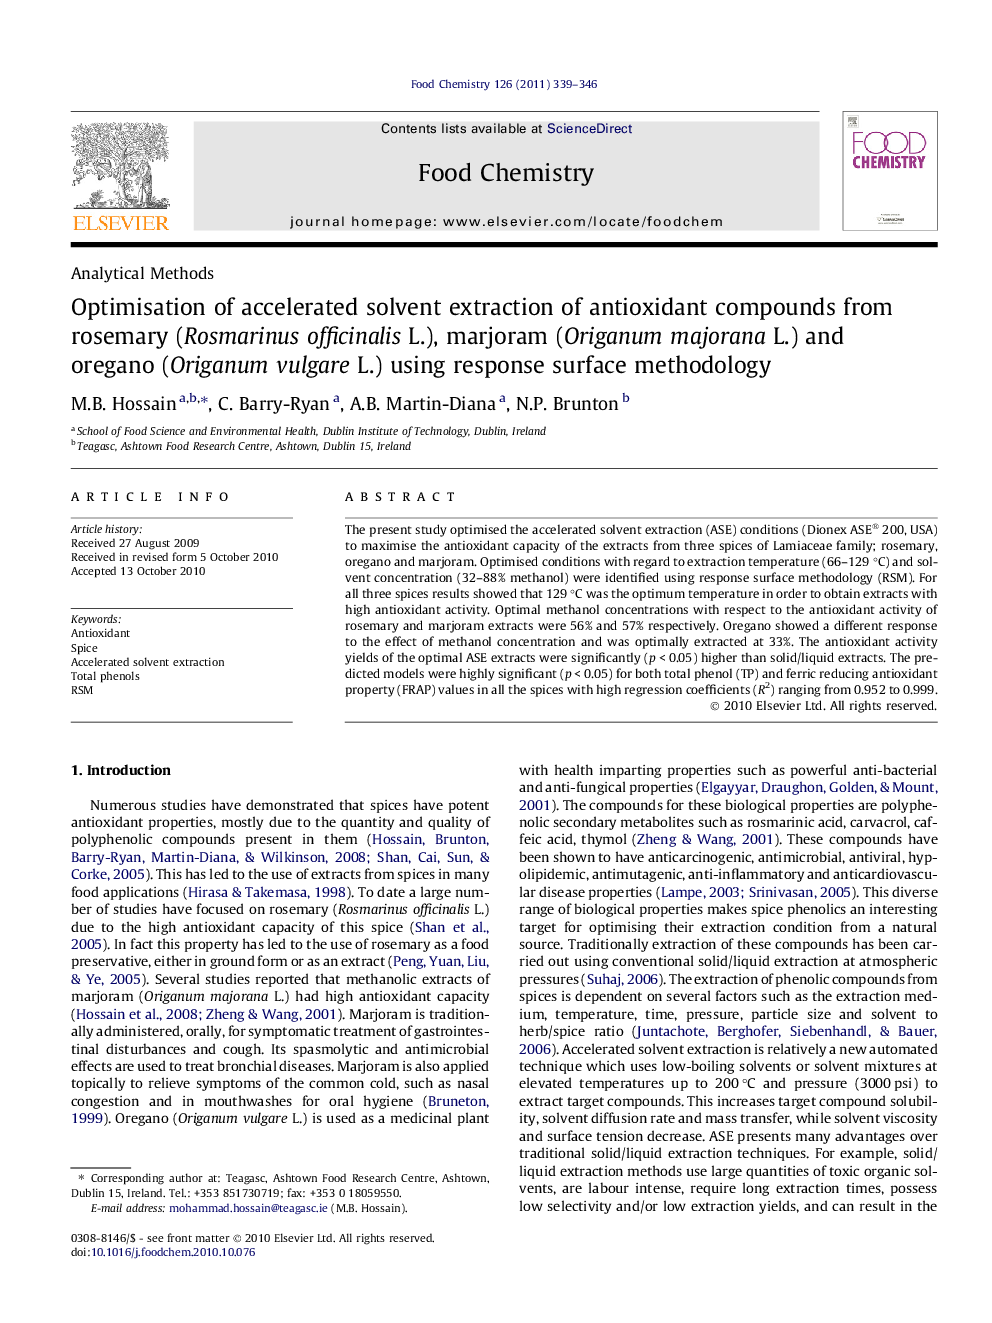 Optimisation of accelerated solvent extraction of antioxidant compounds from rosemary (Rosmarinus officinalis L.), marjoram (Origanum majorana L.) and oregano (Origanum vulgare L.) using response surface methodology